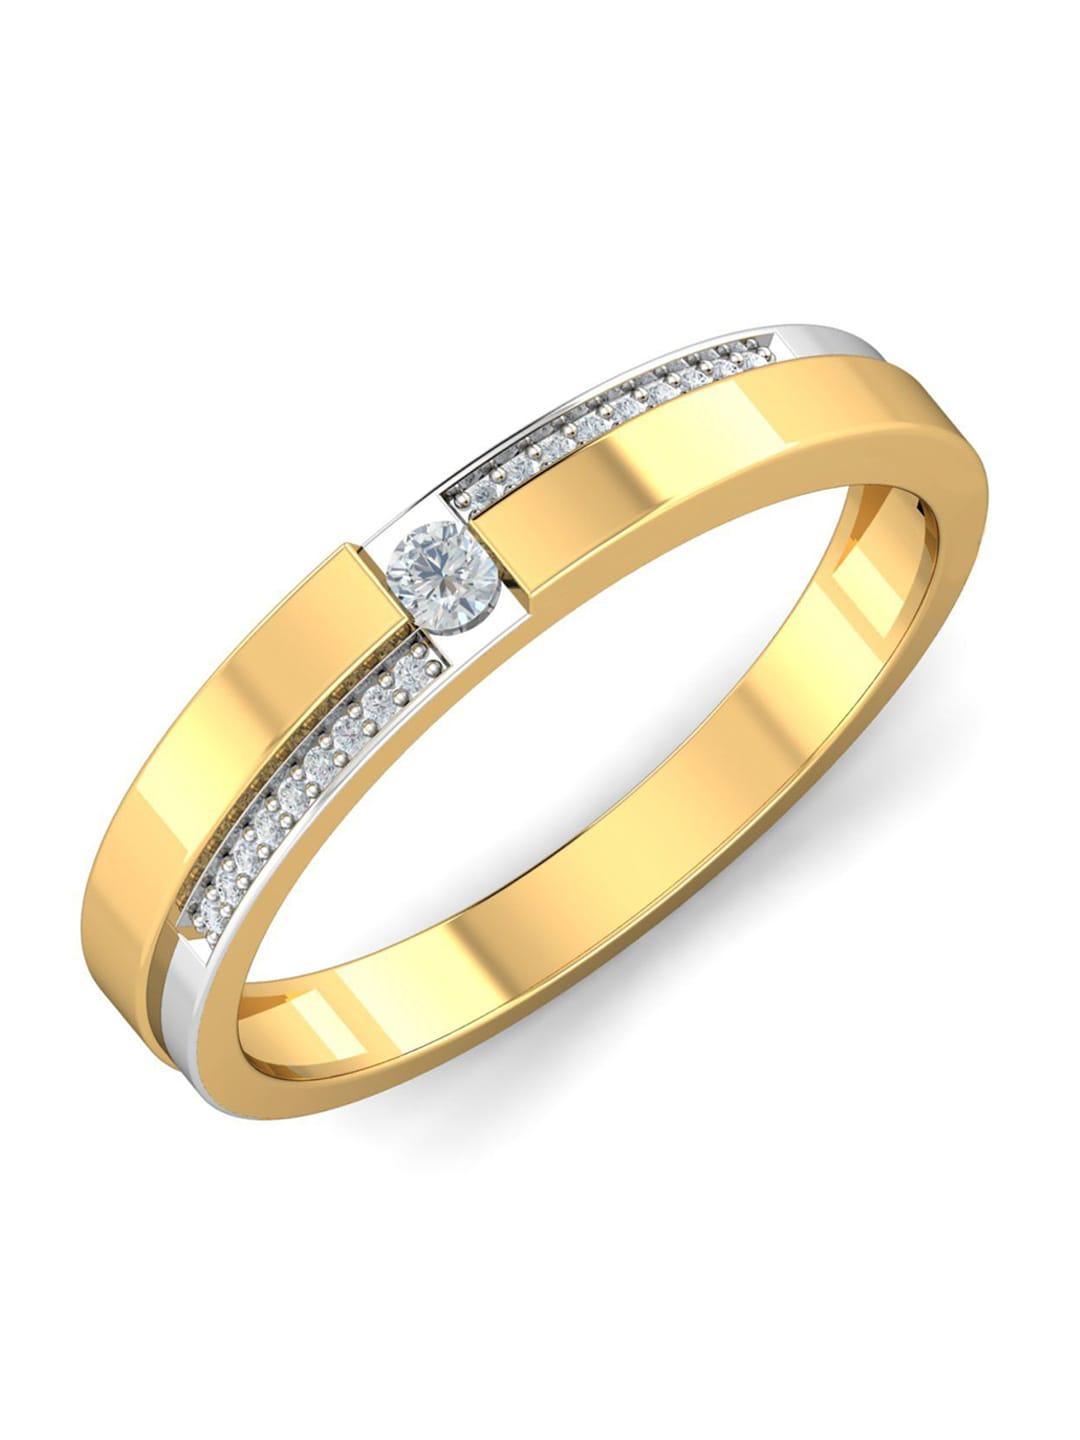 KUBERBOX Clio 18KT Gold Diamond-Studded Couple Band Ring 2.92gm